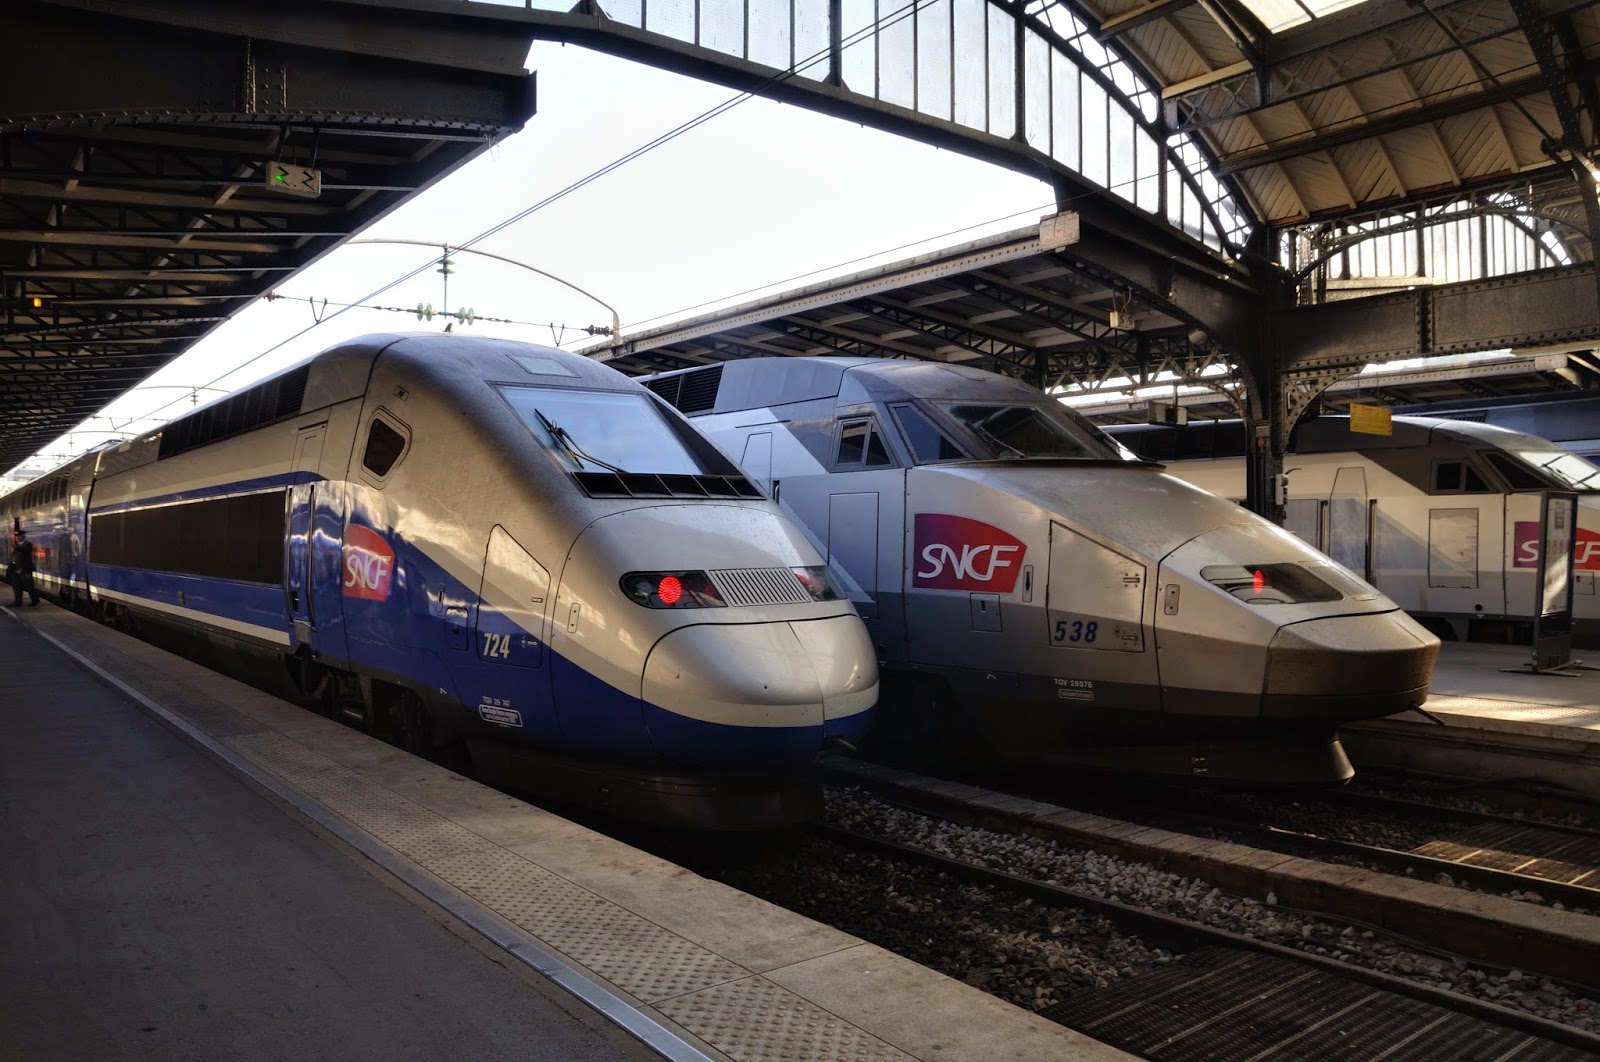 Giroviaggiare: Parigi attende i viaggiatori TGV con offerte estive